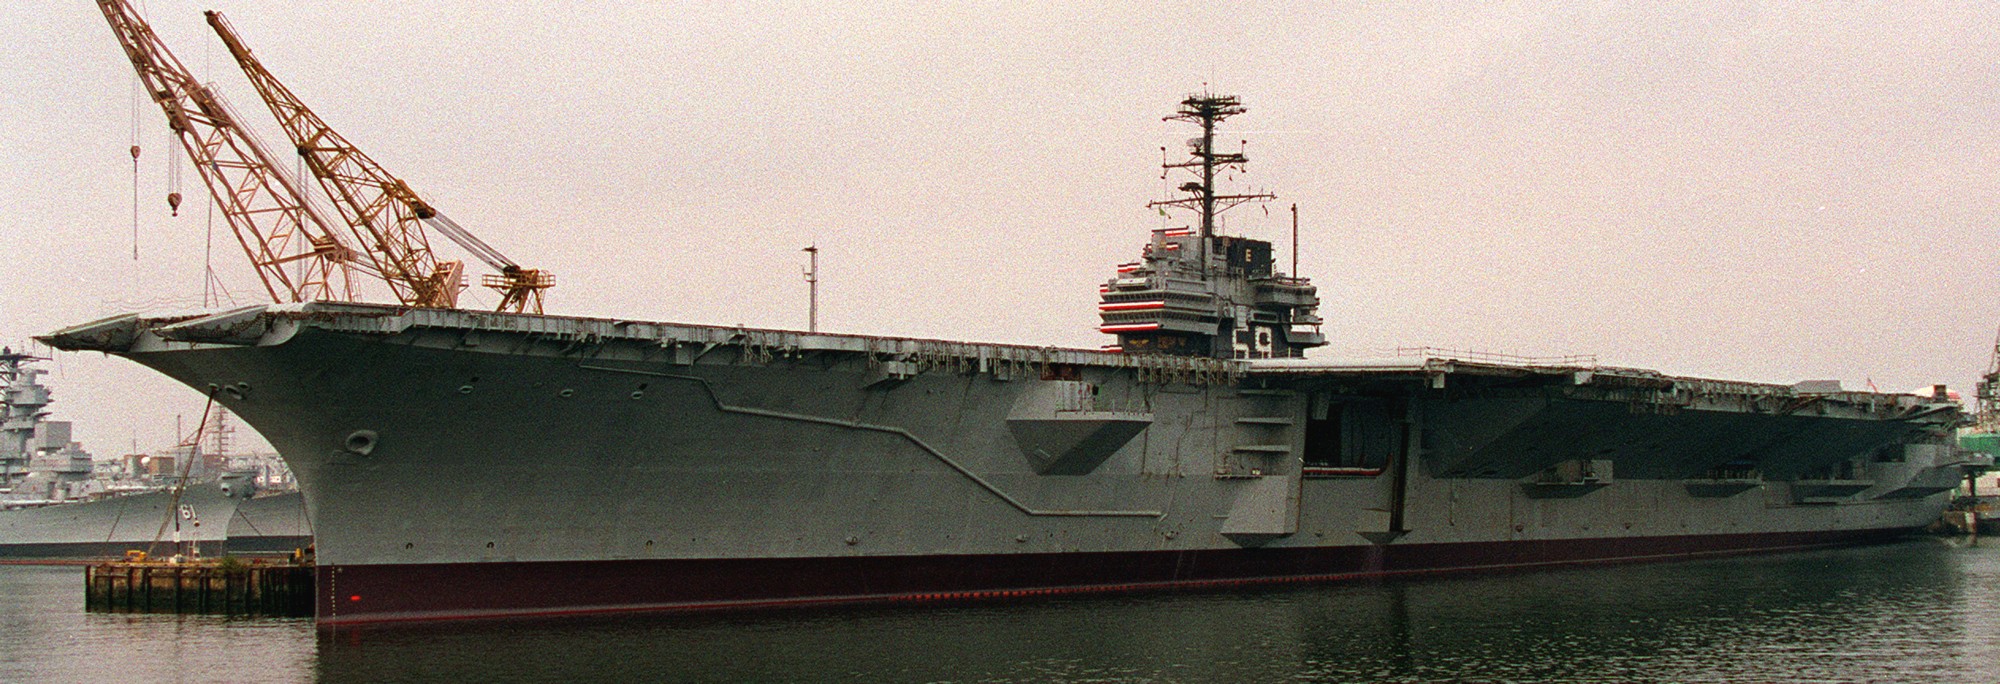 cv-59 uss forrestal aircraft carrier us navy decommissioning 1993 philadelphia 110